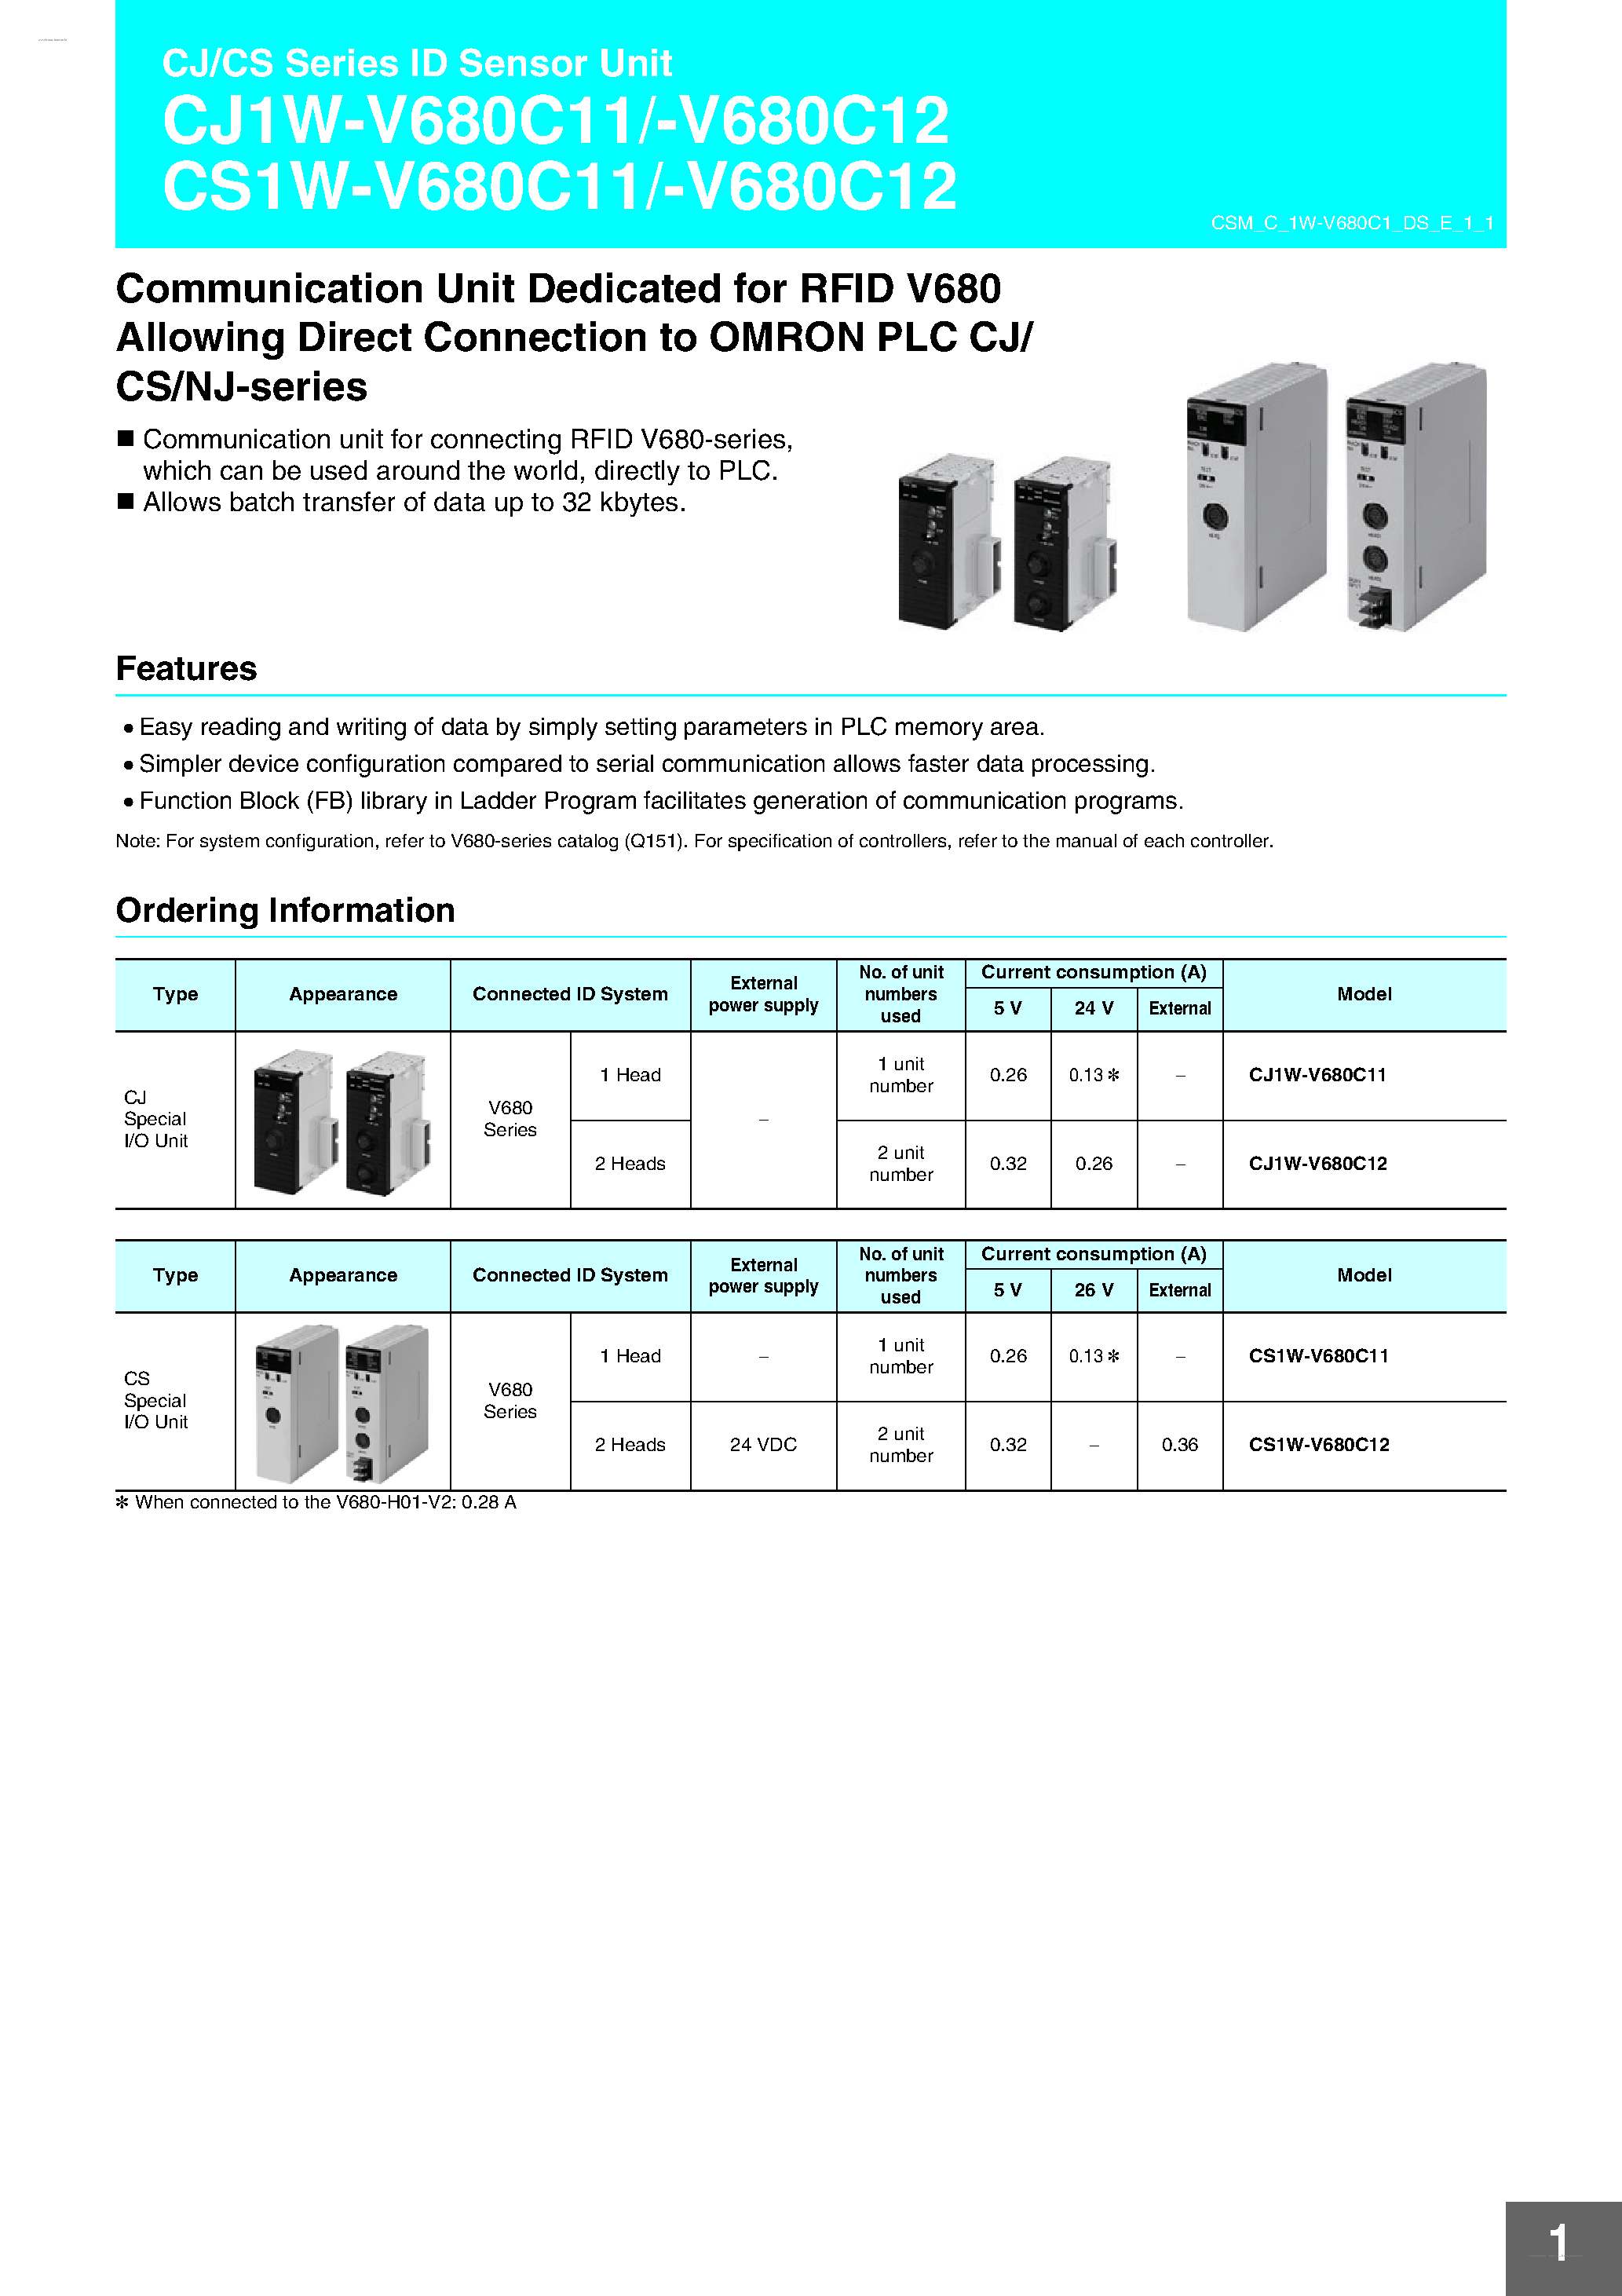 Даташит CS1W-V680C11 - (CS1W-V680C11 / CS1W-V680C12) CJ/CS Series ID Sensor Unit страница 1